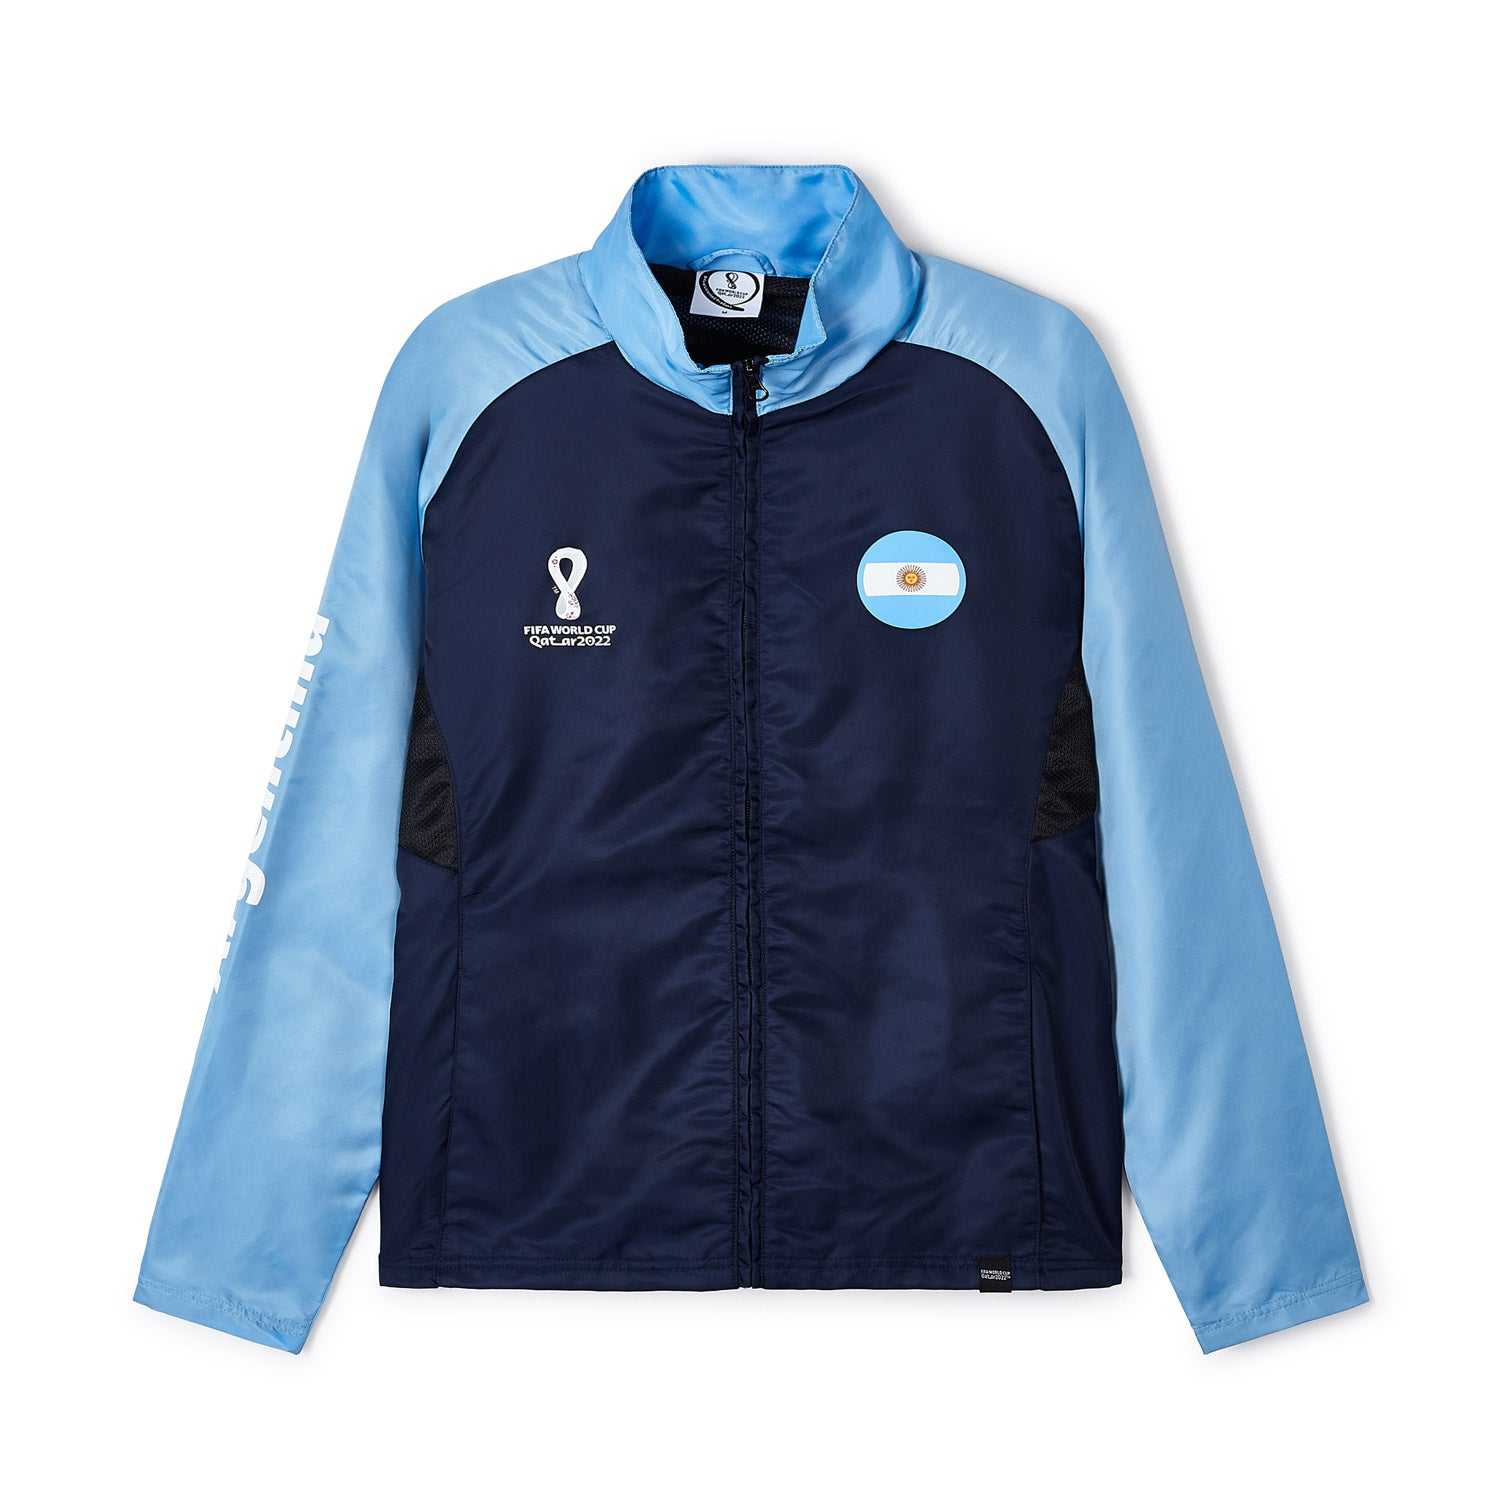 World Cup 2022 Argentina Blue Raglan Jacket - Men's